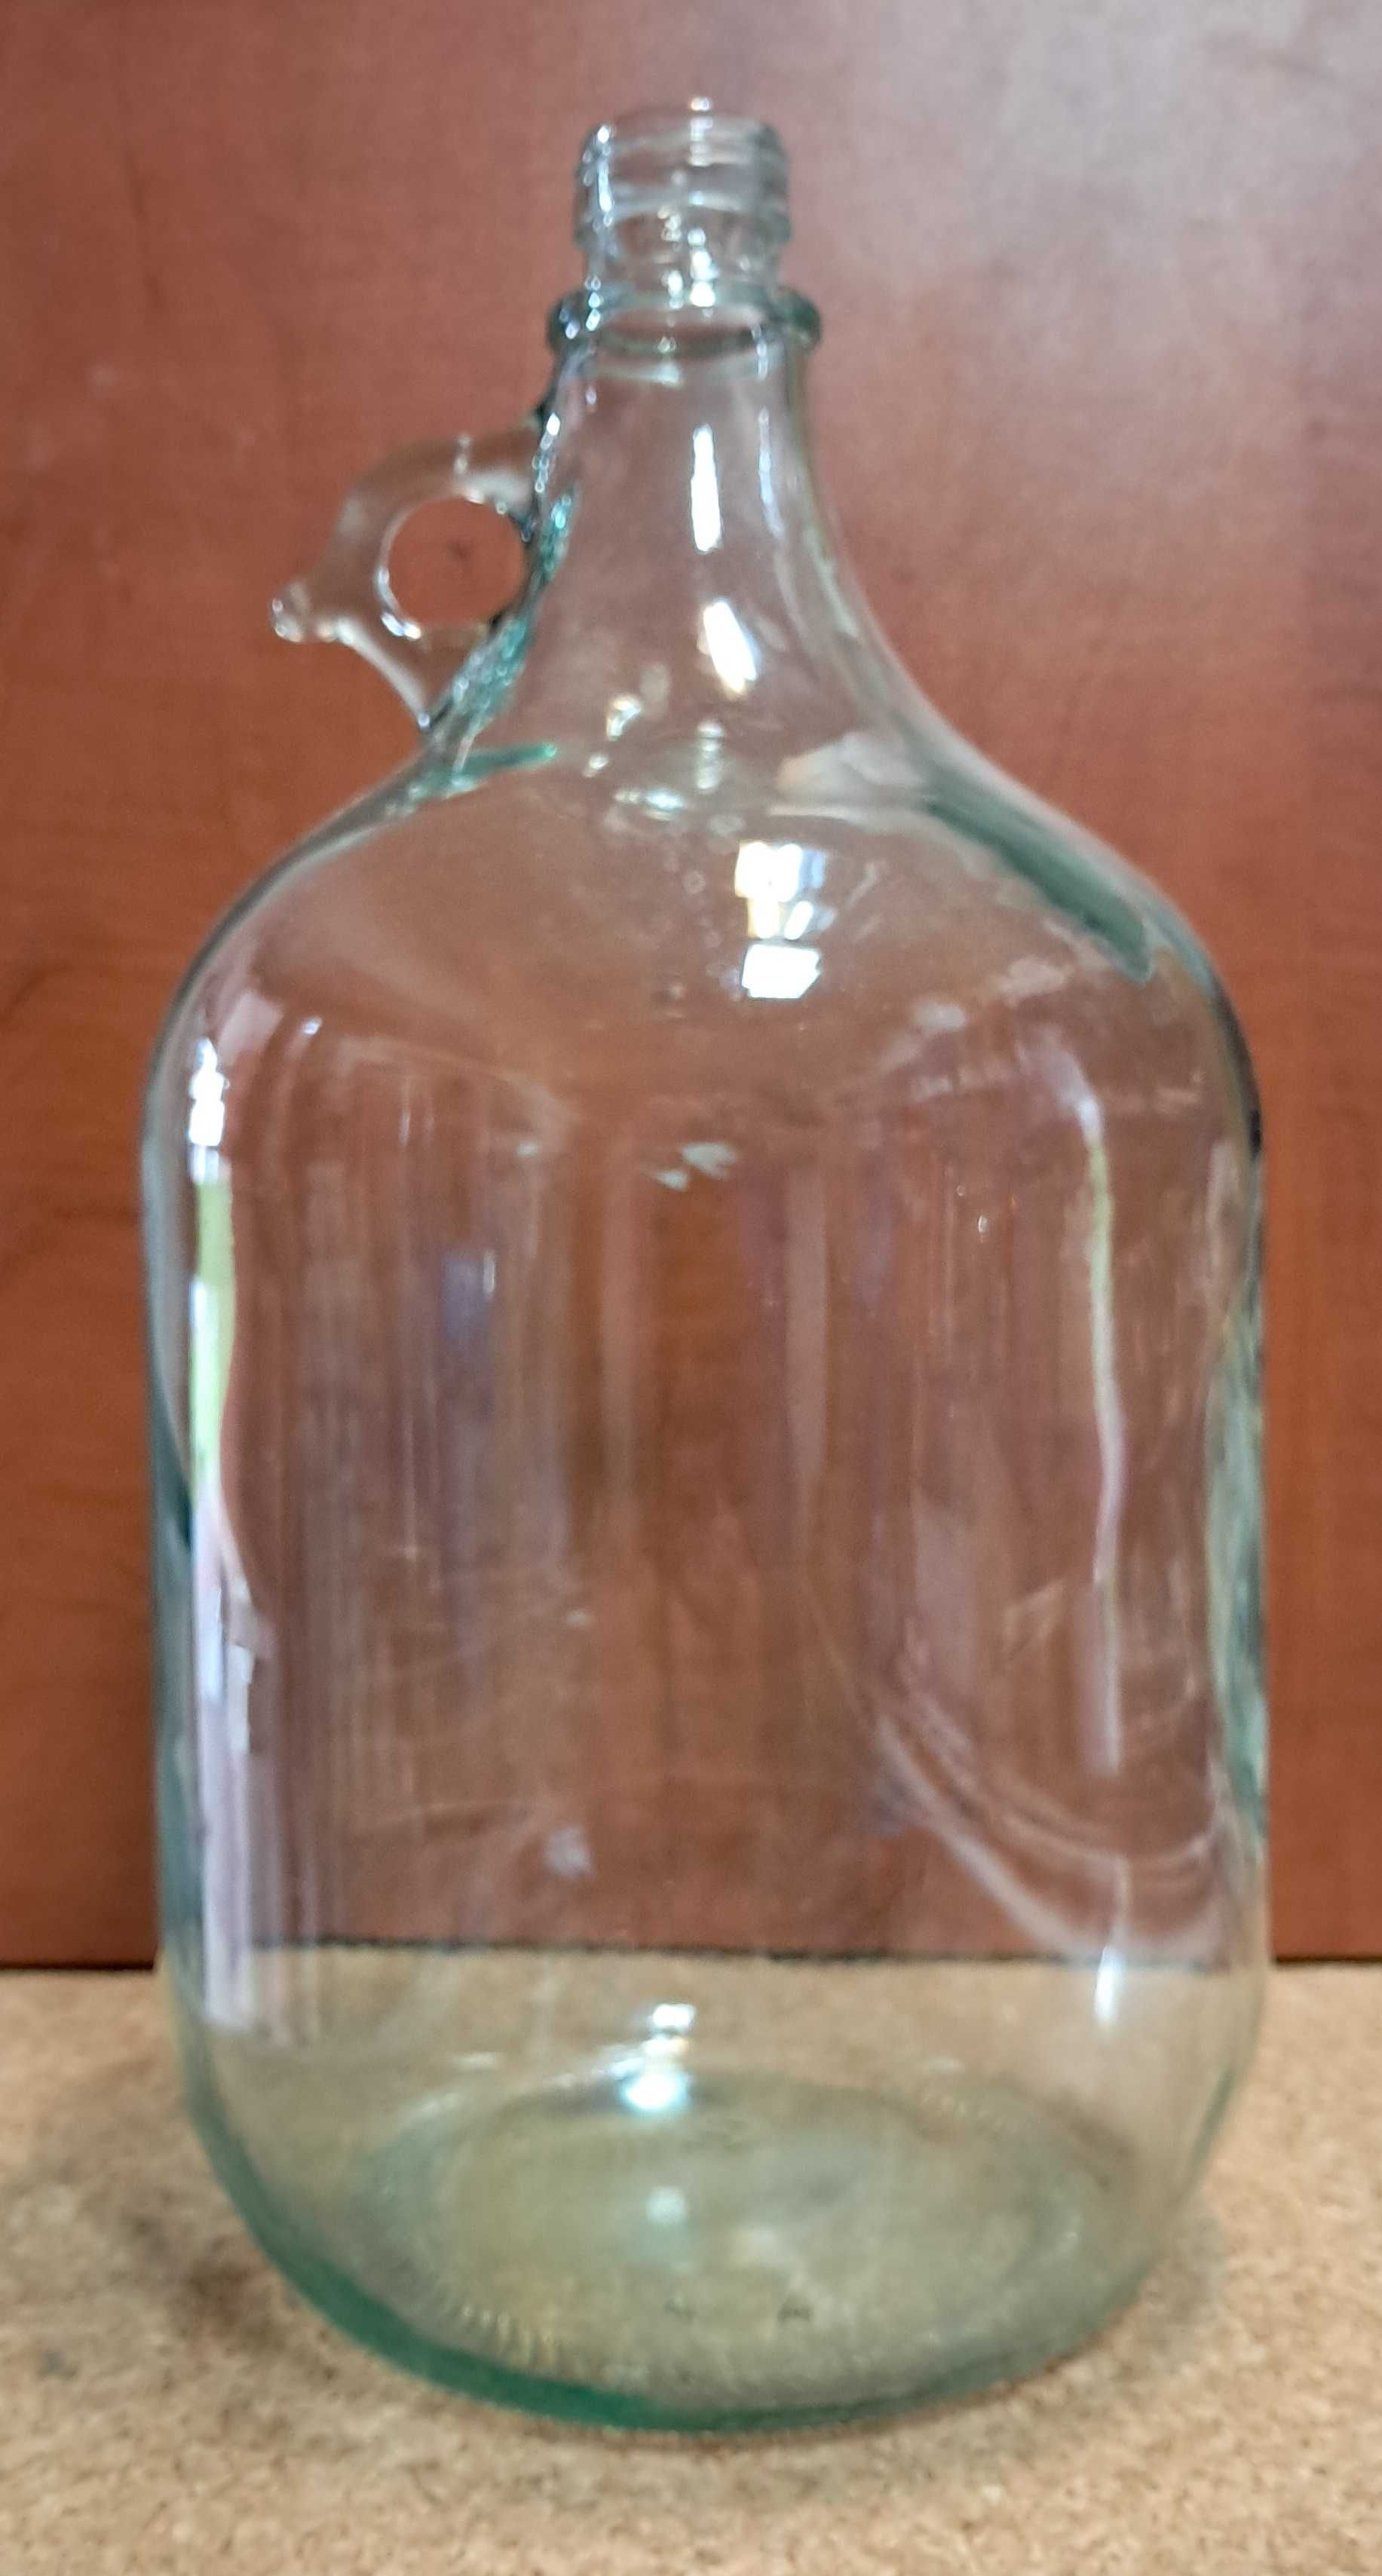 Butla szklana 5l  gąsior balon 5 l dymion dama butelka 5dm3